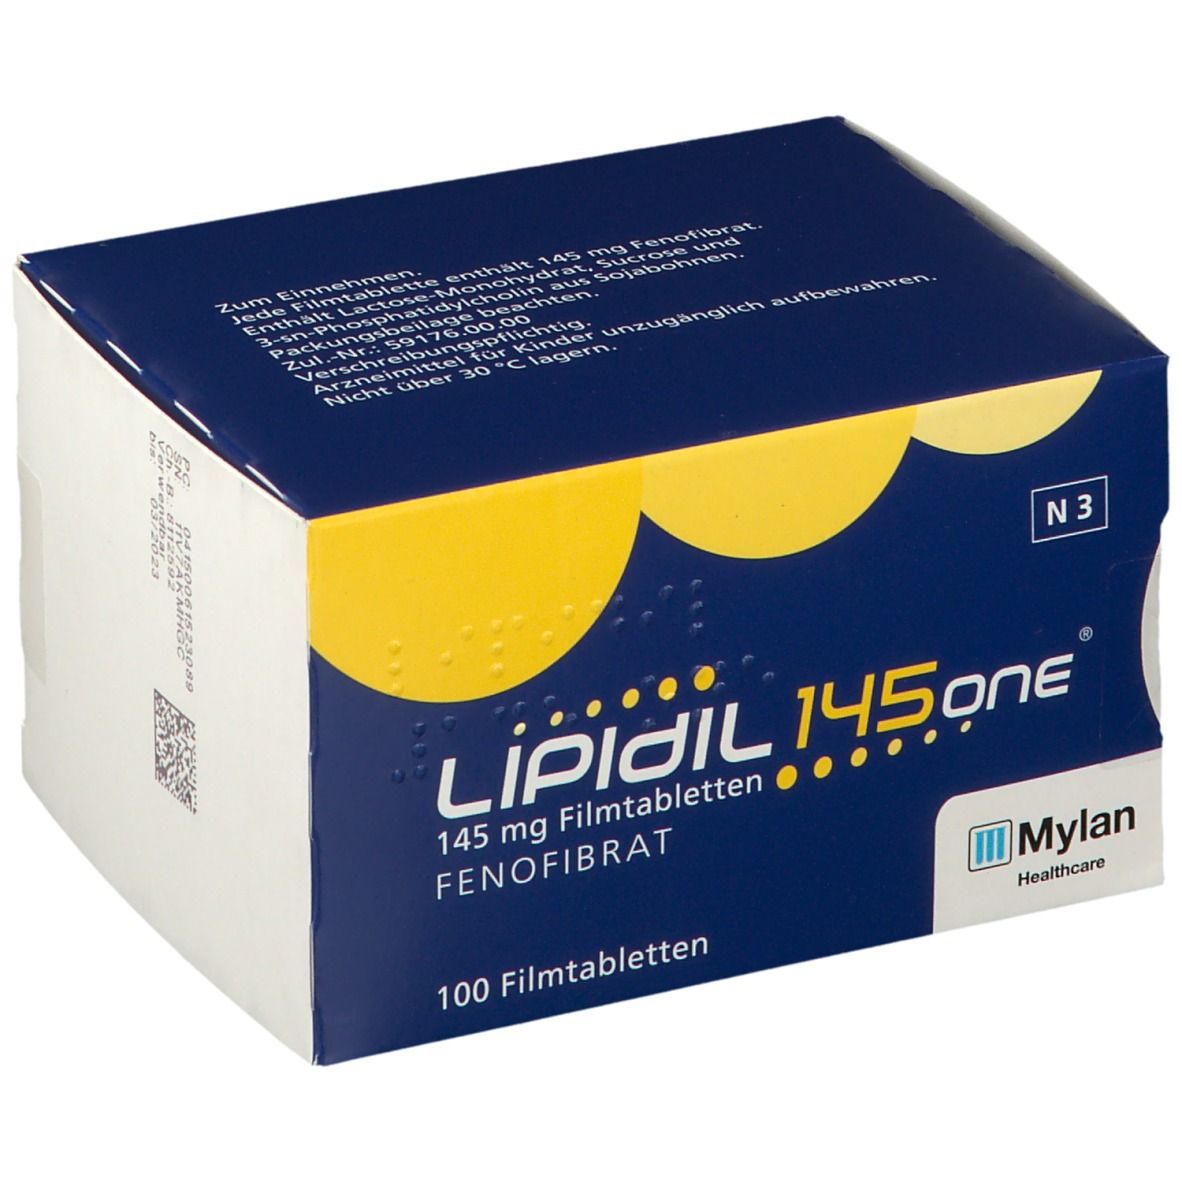 Lipidil 145 one®